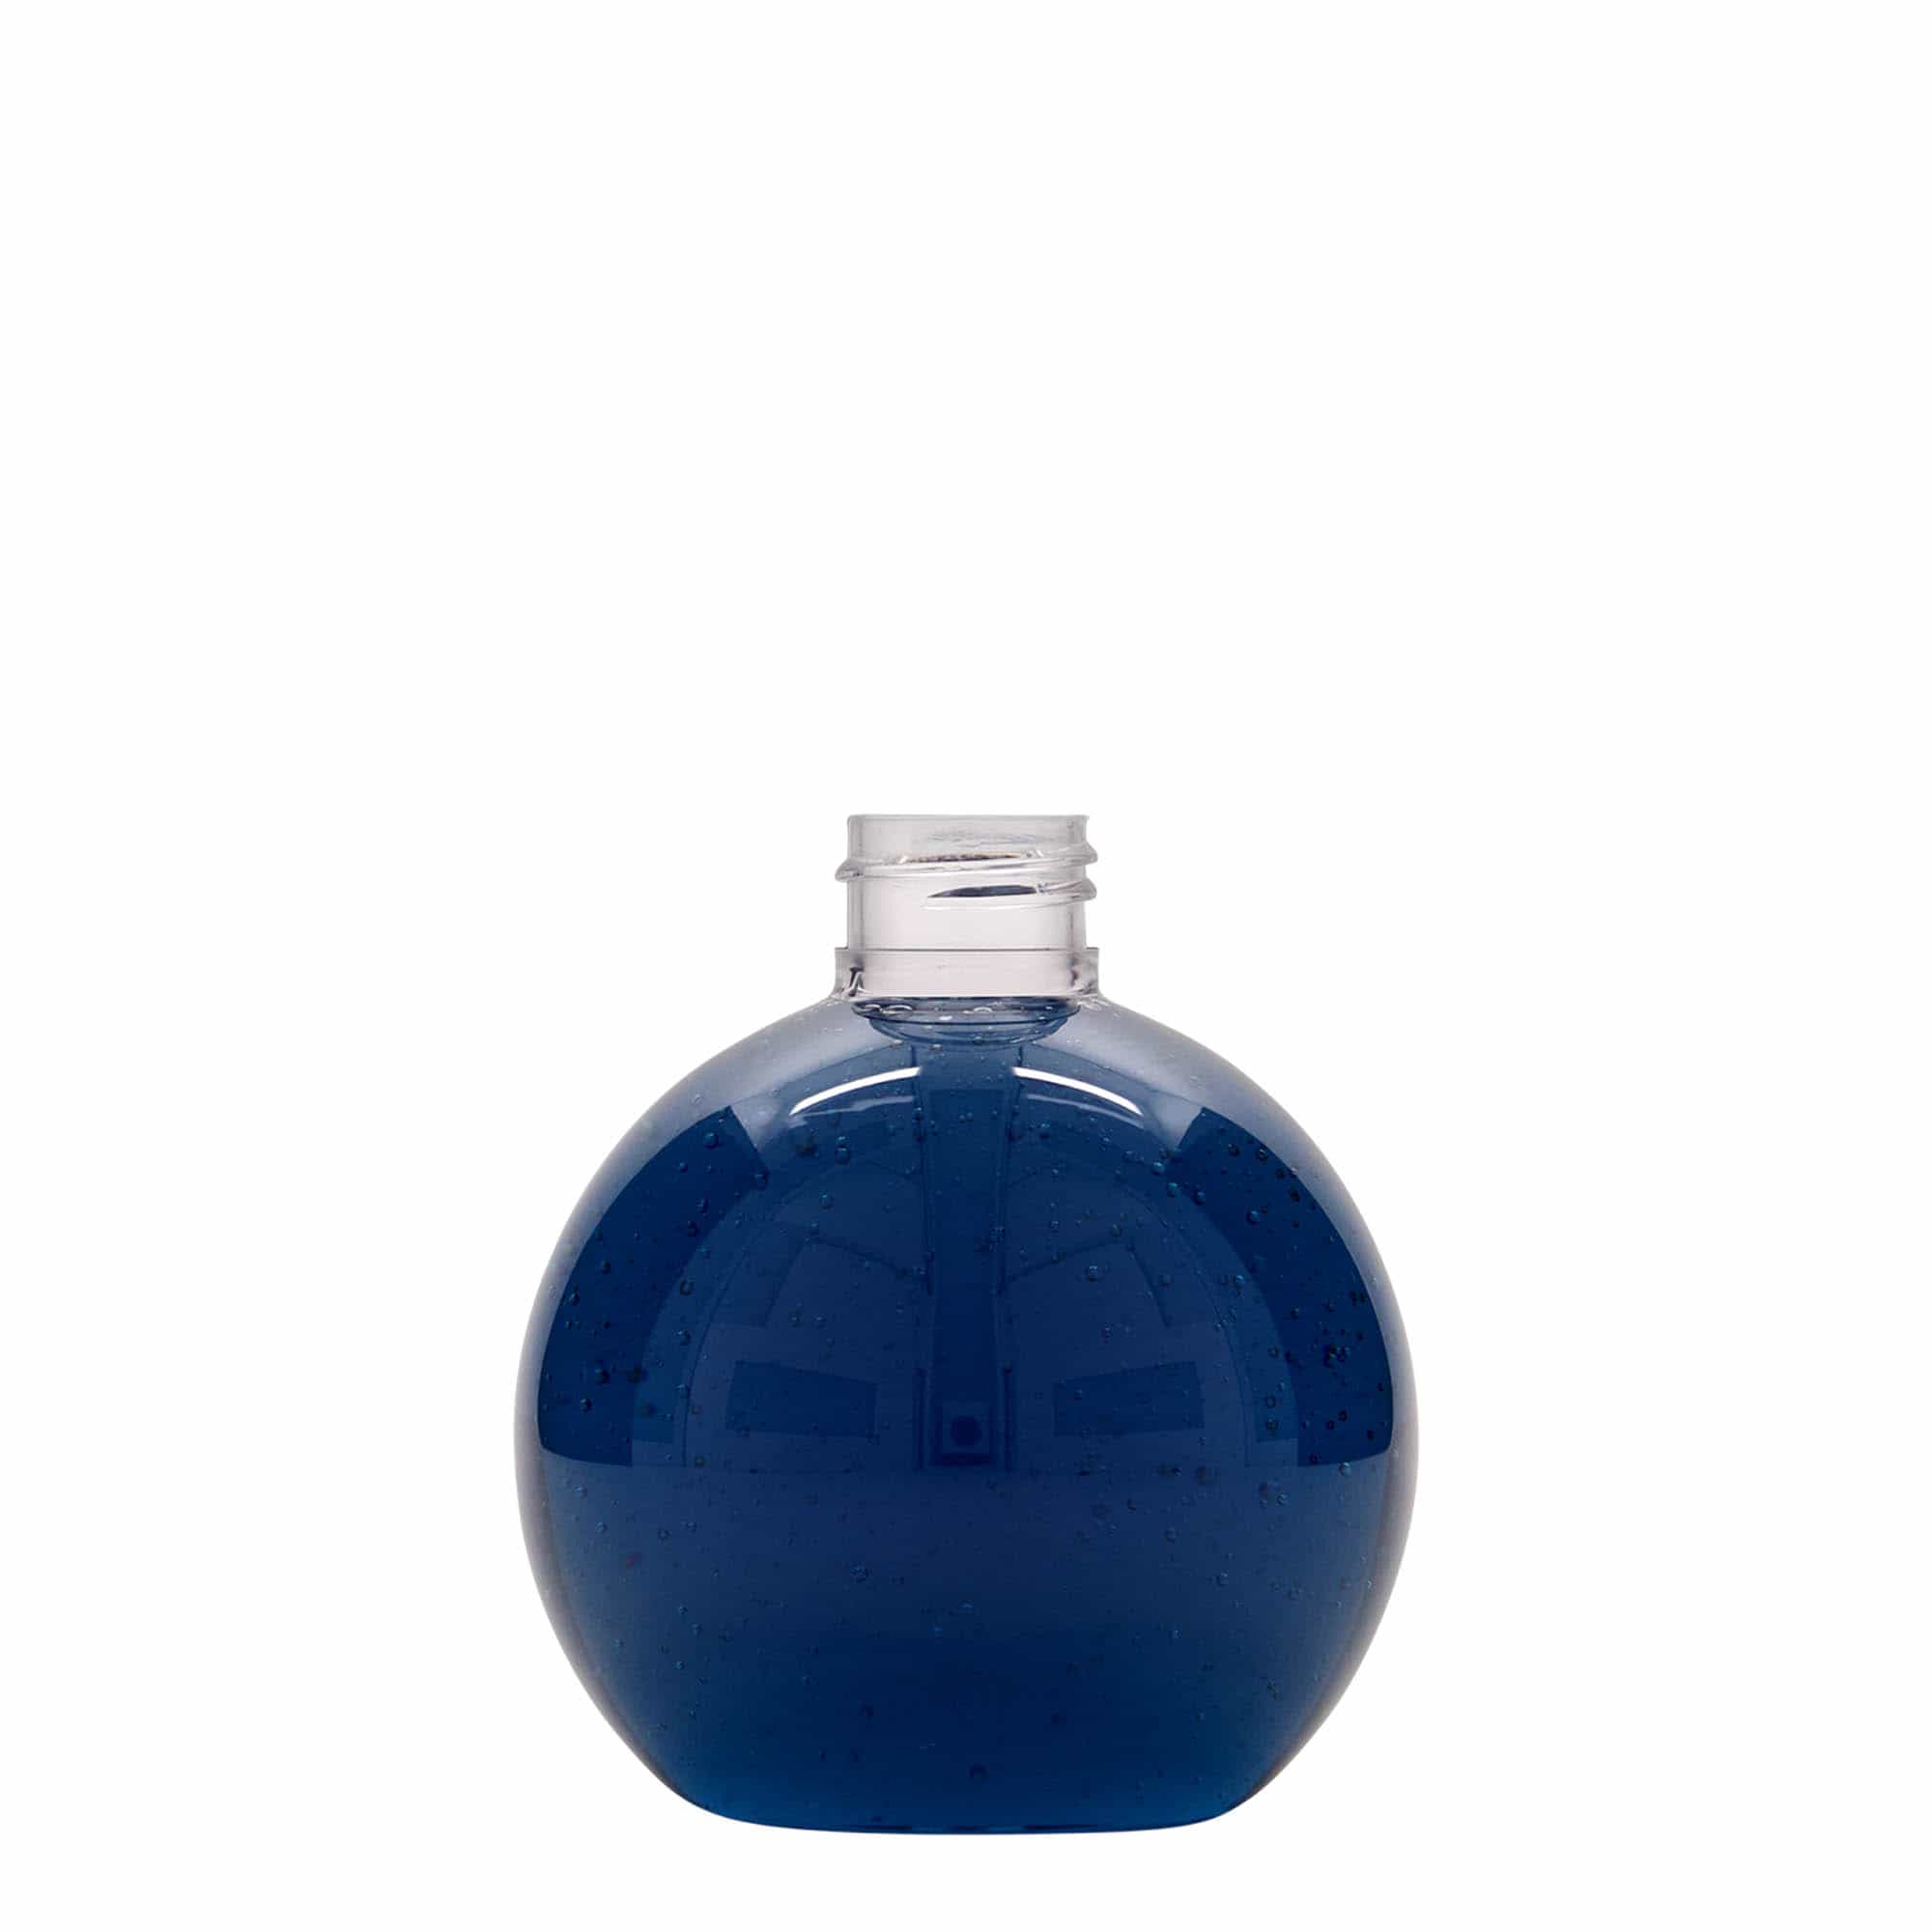 Botella de PET 'Perry' de 250 ml, redonda, plástico, boca: GPI 24/410